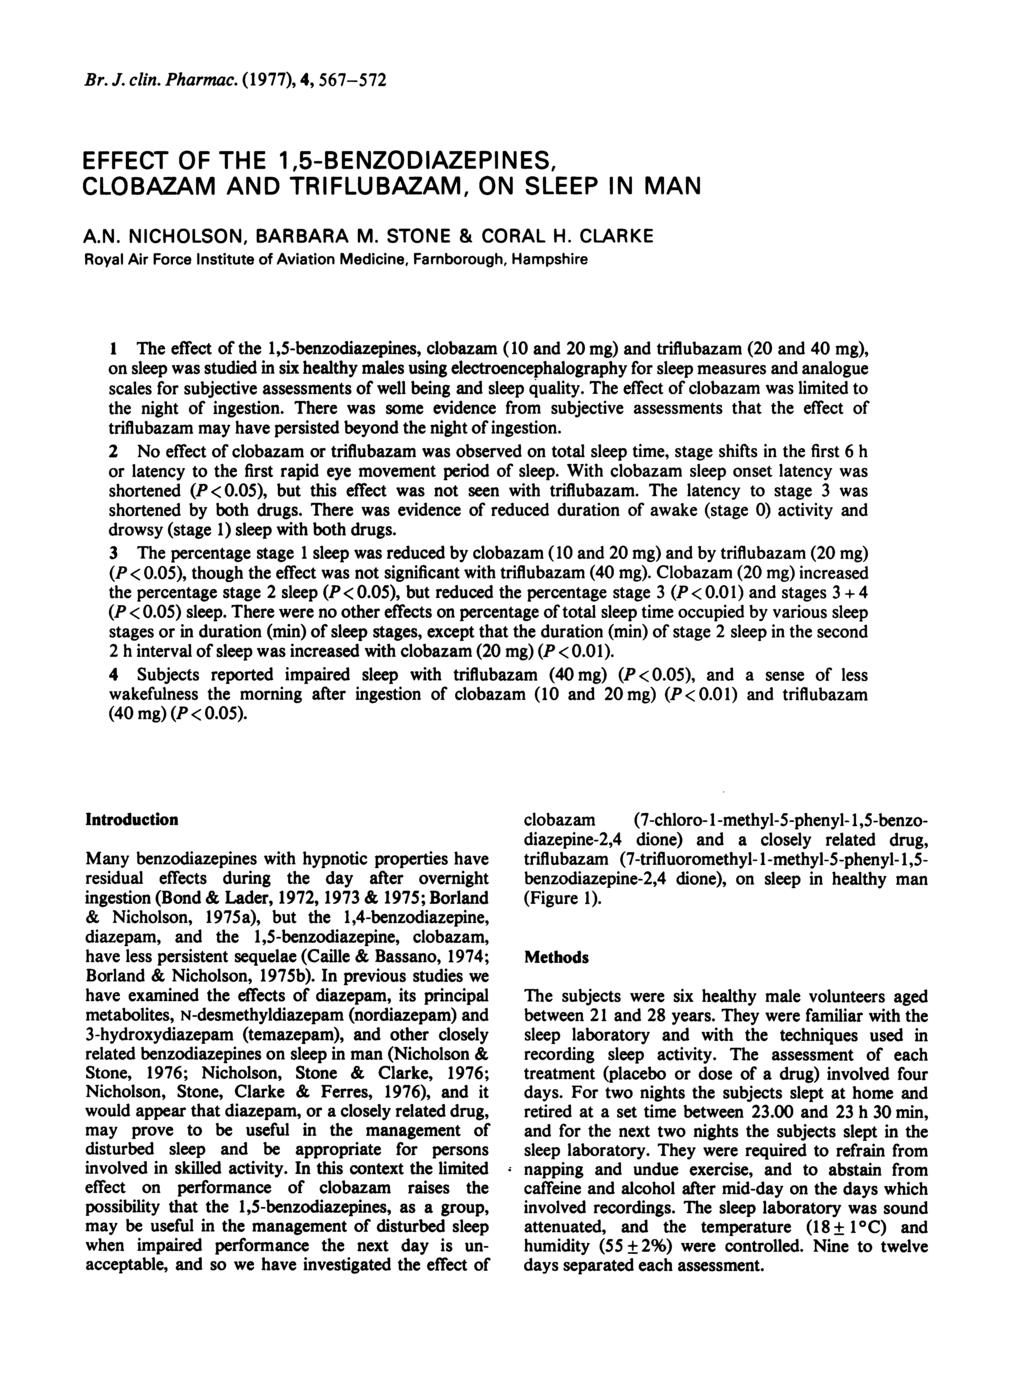 Br. J. clin. Pharmac. (1977), 4, 567-572 EFFECT OF THE 1,5-BENZODIAZEPINES, CLOBAZAM AND TRIFLUBAZAM, ON SLEEP IN MAN A.N. NICHOLSON, BARBARA M. STONE & CORAL H.